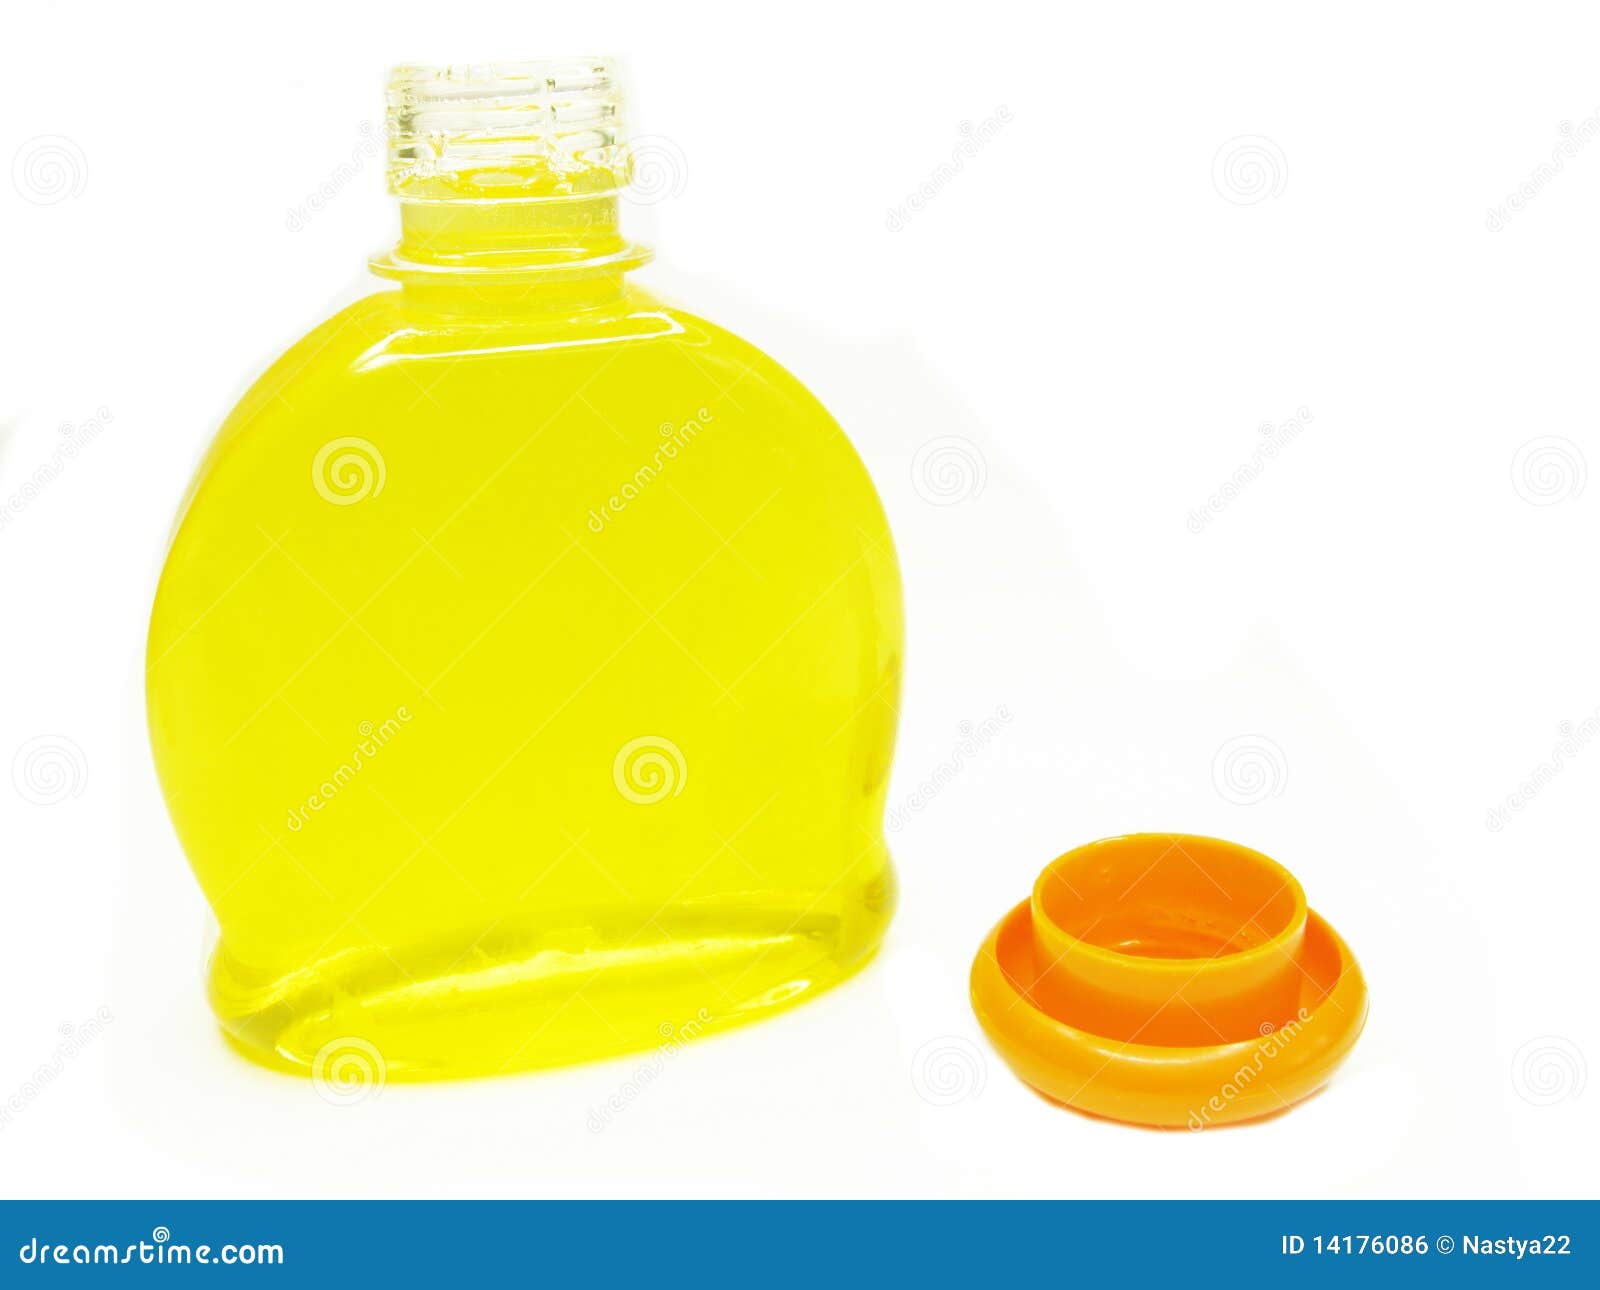 Yellow Herbal Shampoo Bottle Stock Photo Image of bath